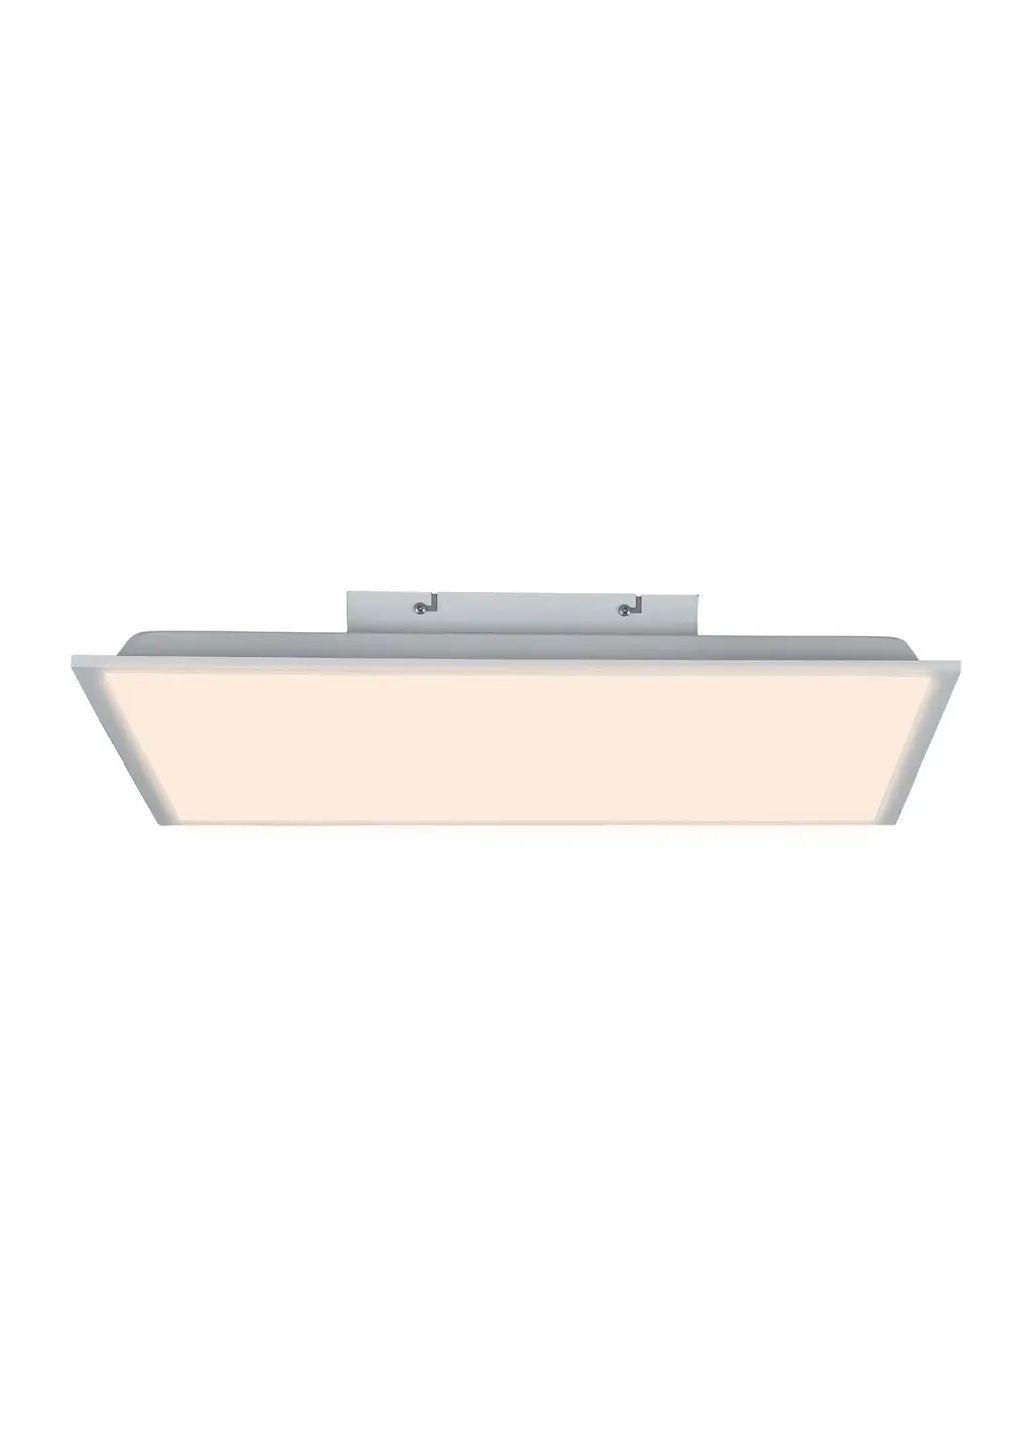 Настенная/потолочная LED панель Smart Home Lidl Livarno Lux (292790313)